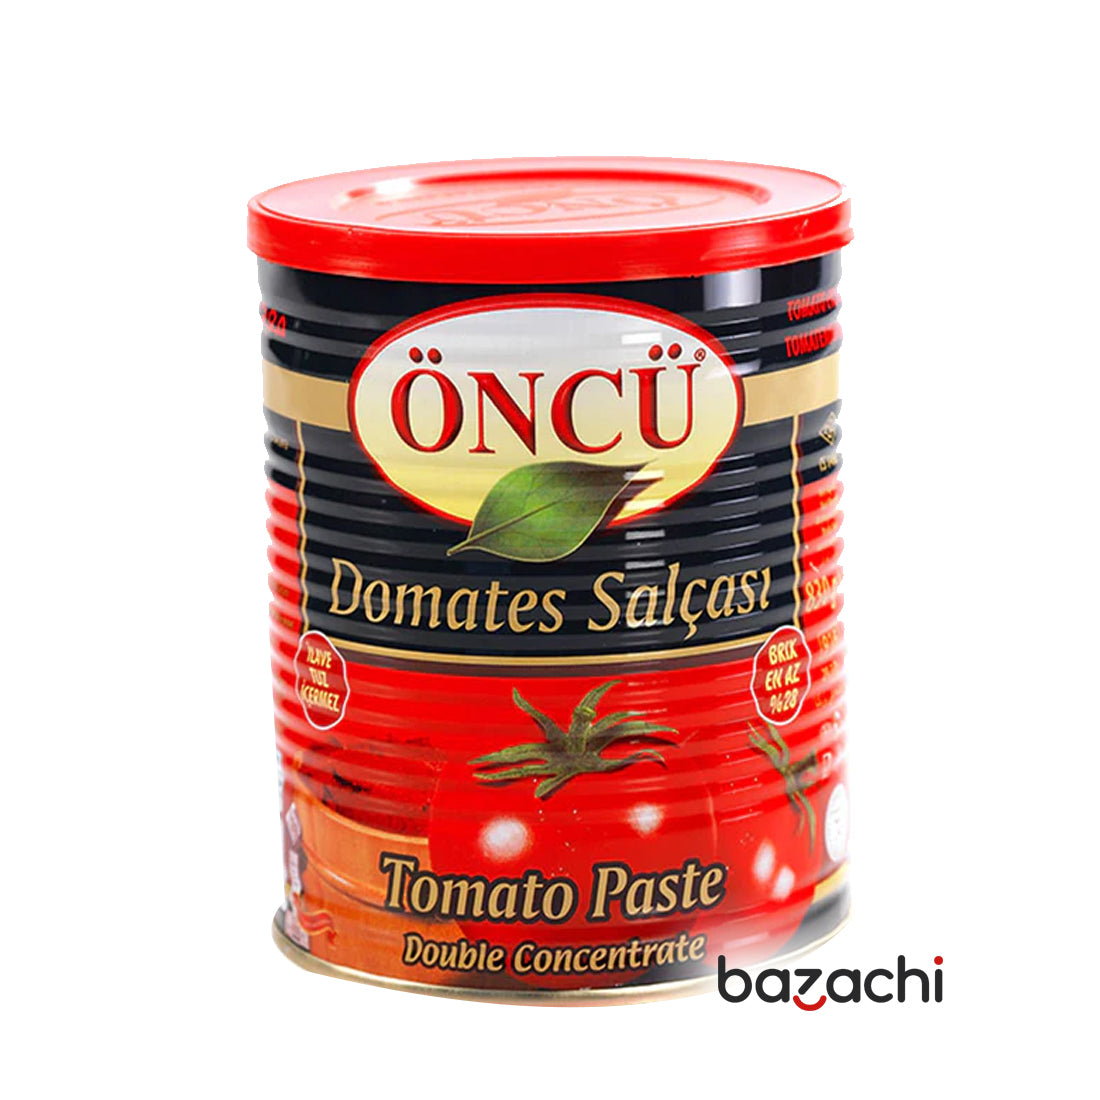 Oncu Tomato Paste (Tomato Salcasi) 830g